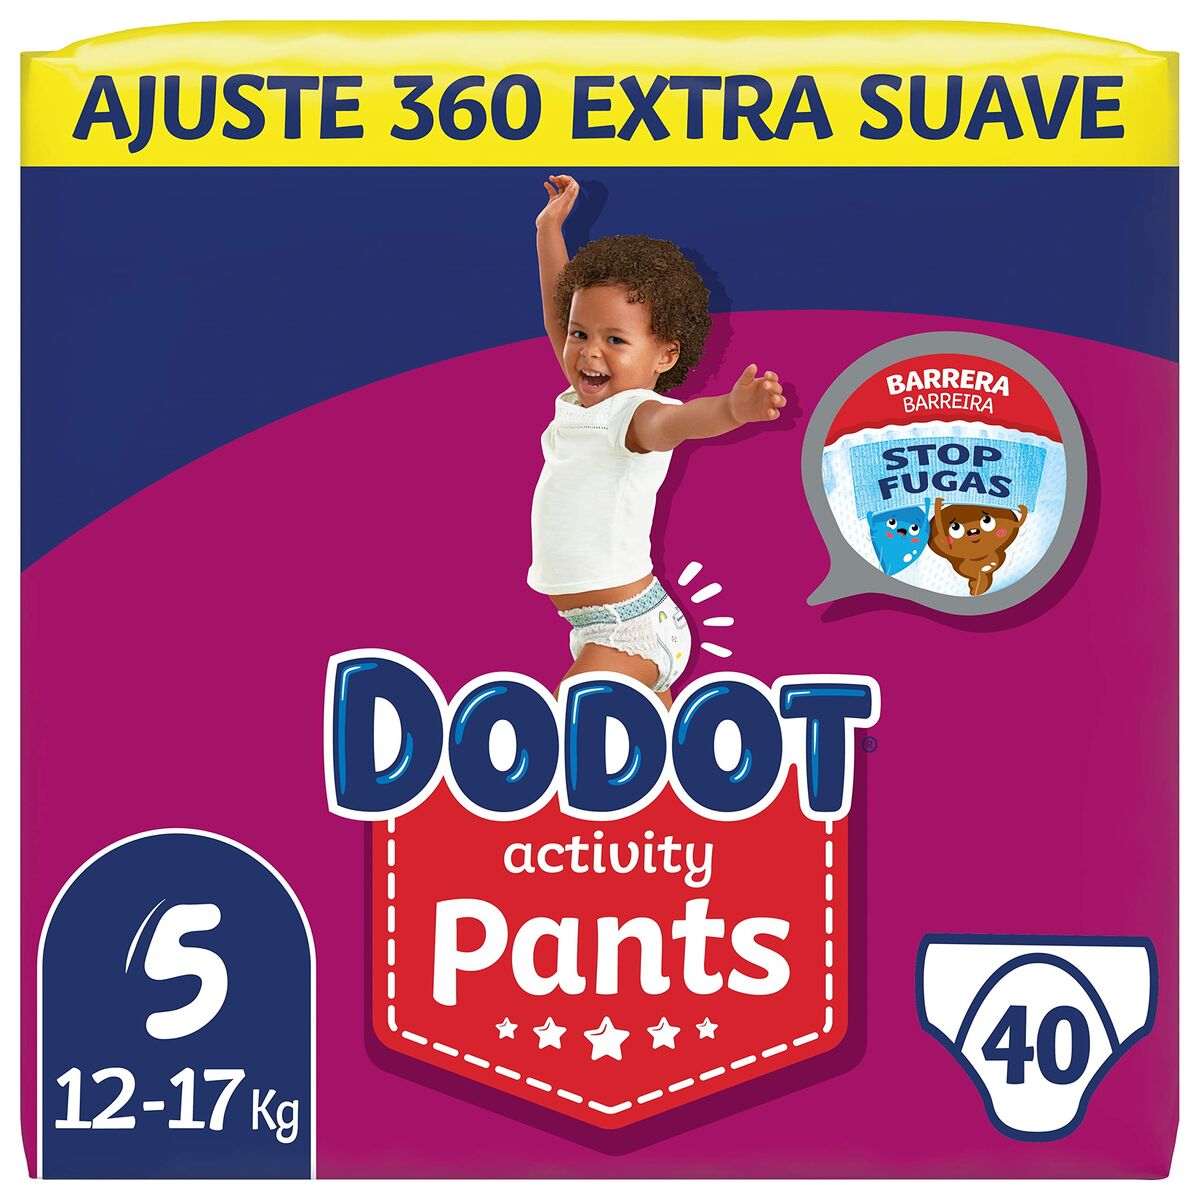 DODOT Pañales Activity Pants Talla 5 (12-17kg) 40 Unidades